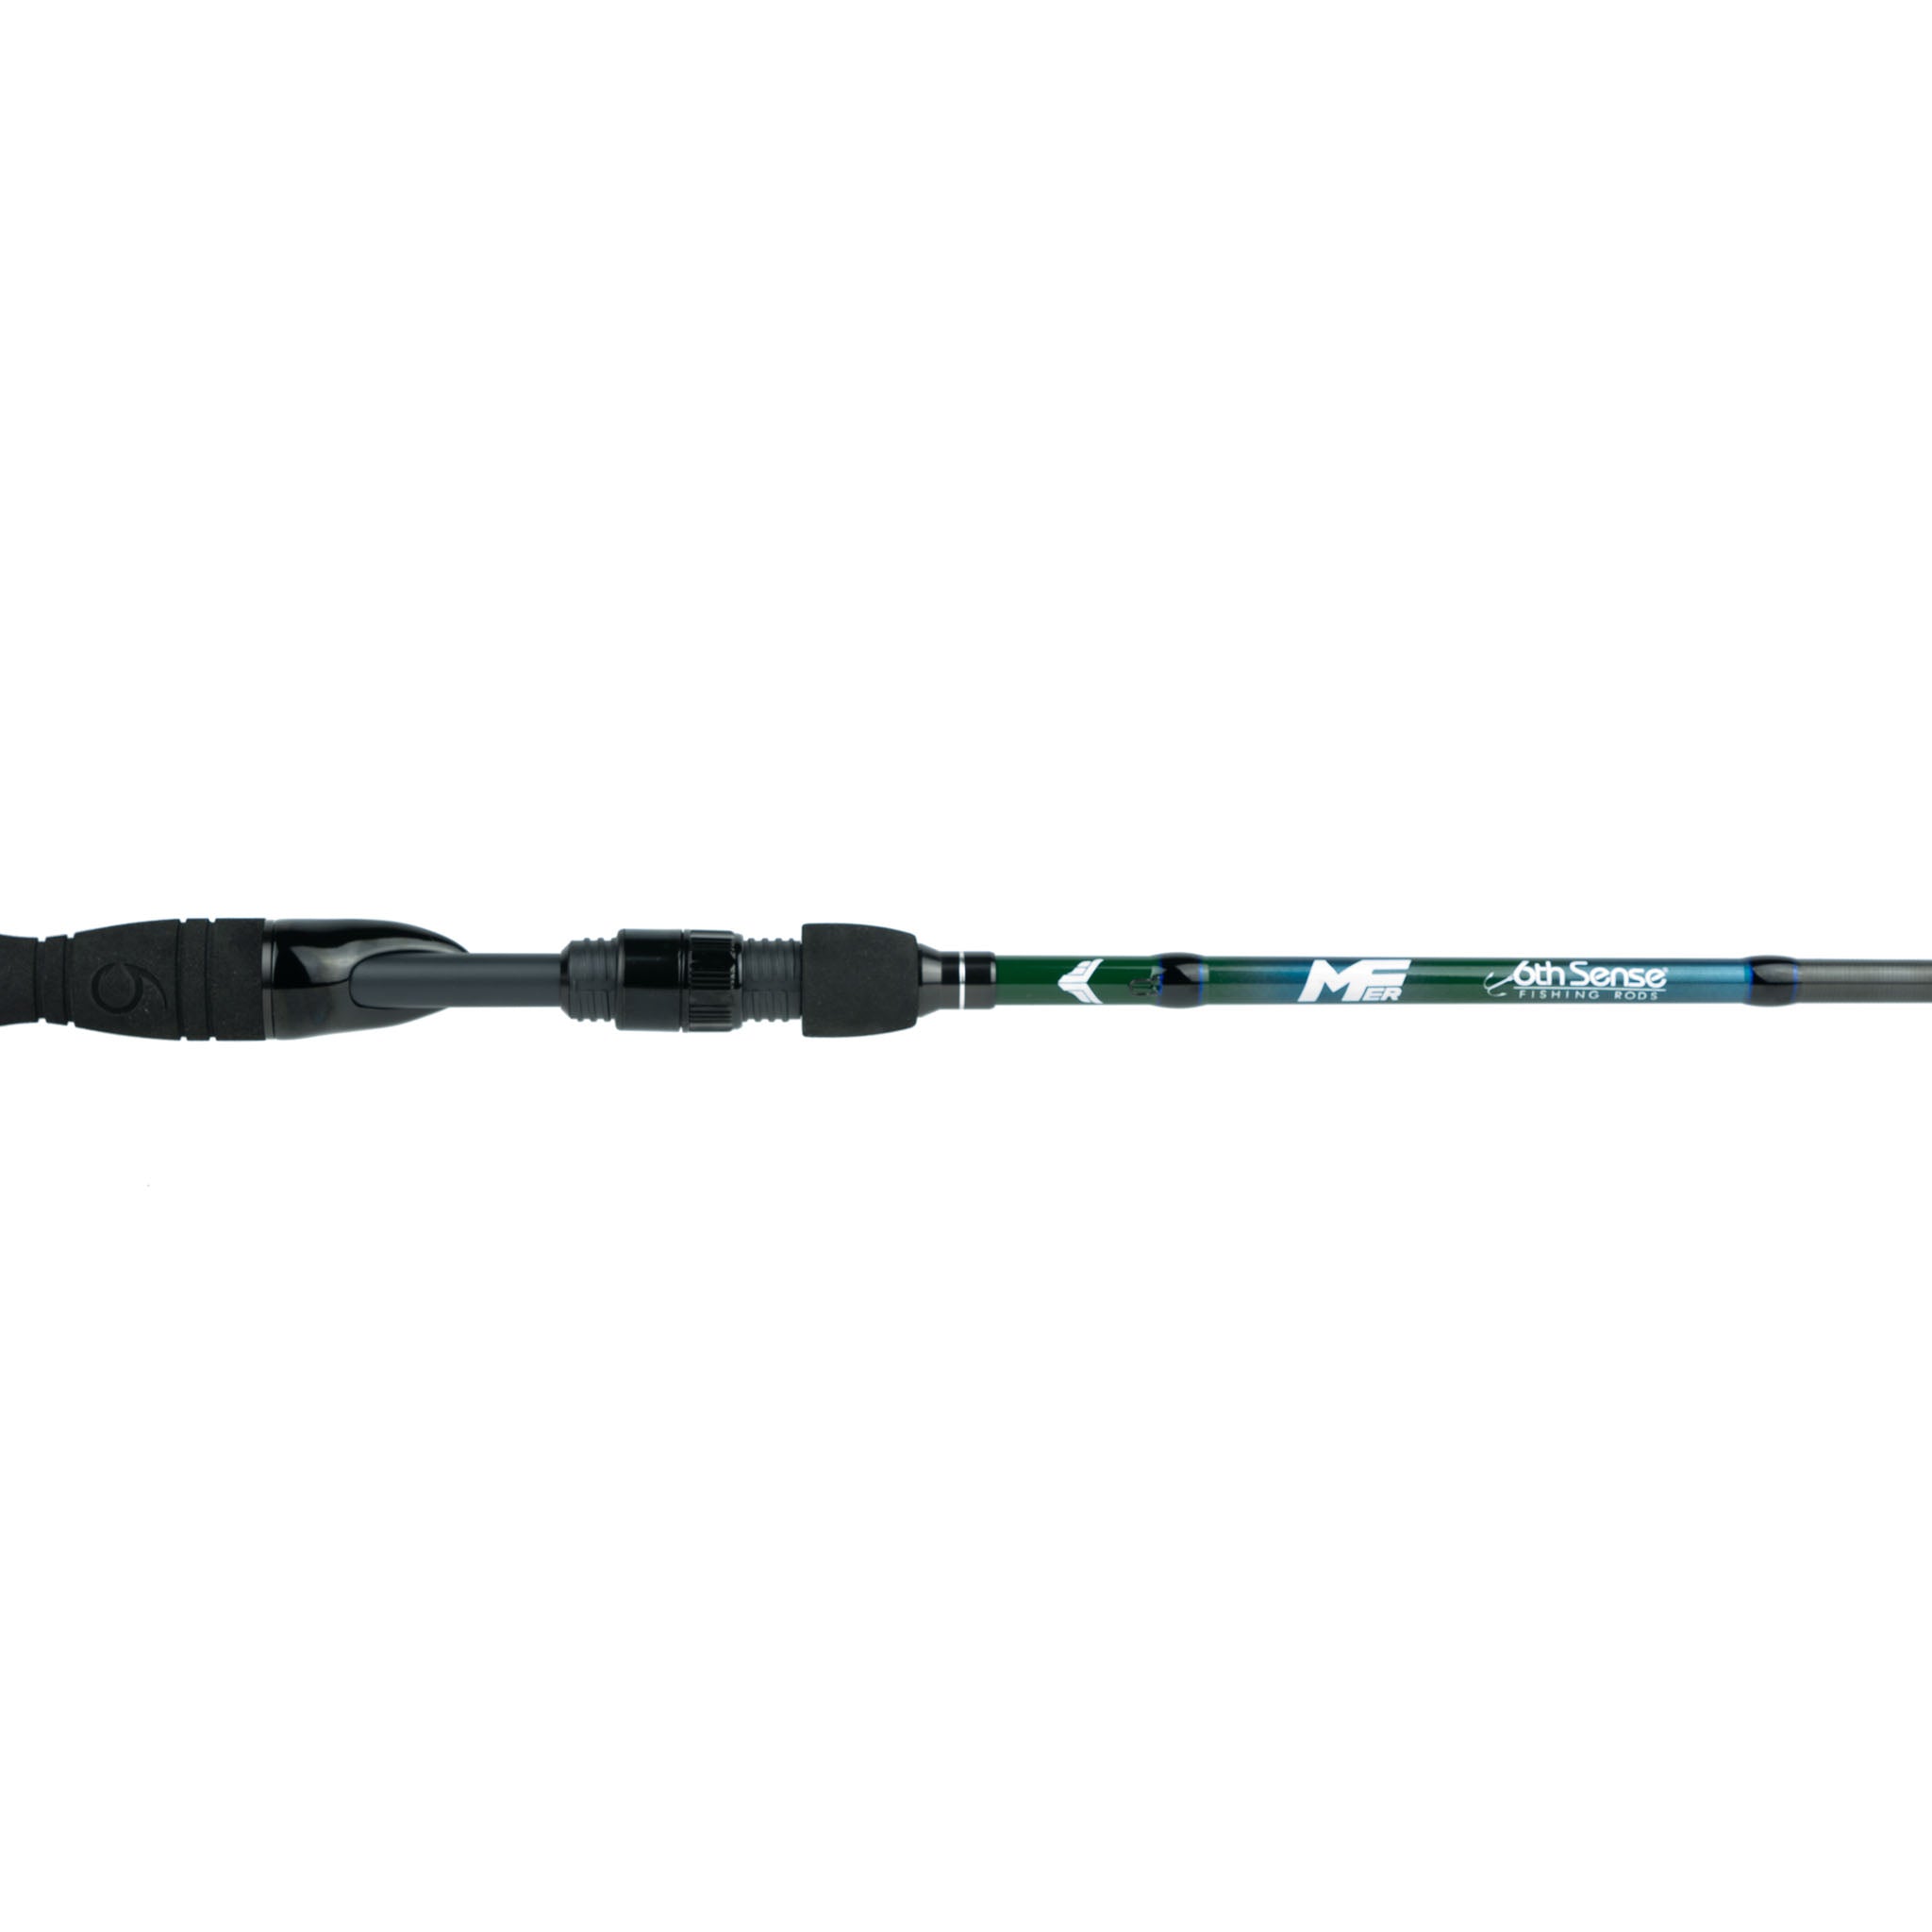 6th Sense Fishing - Milliken Series Rod - 7'4 Medium, Mod Fast